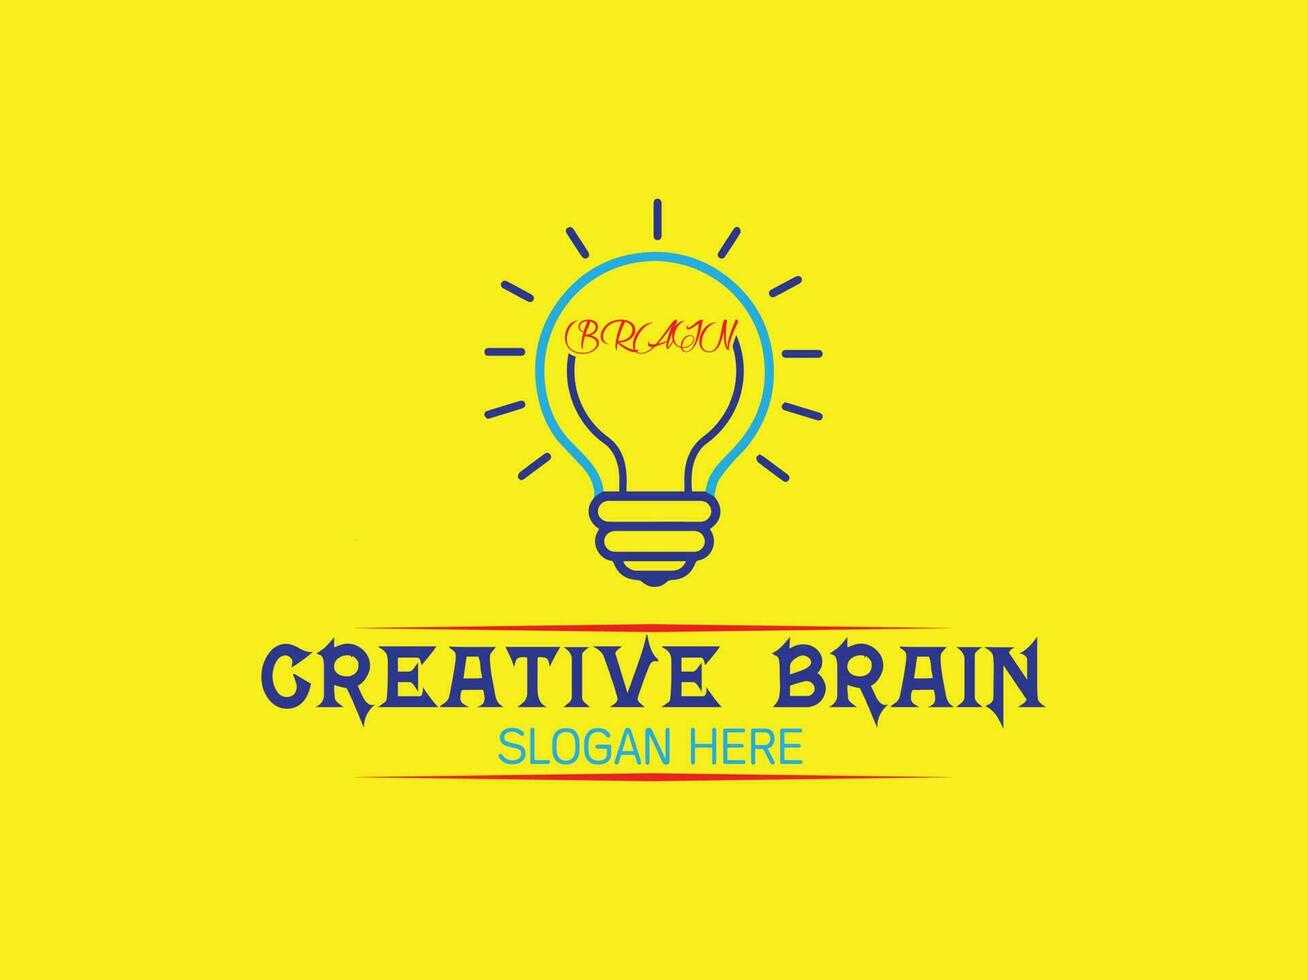 Creative brain logo victor temlate vector